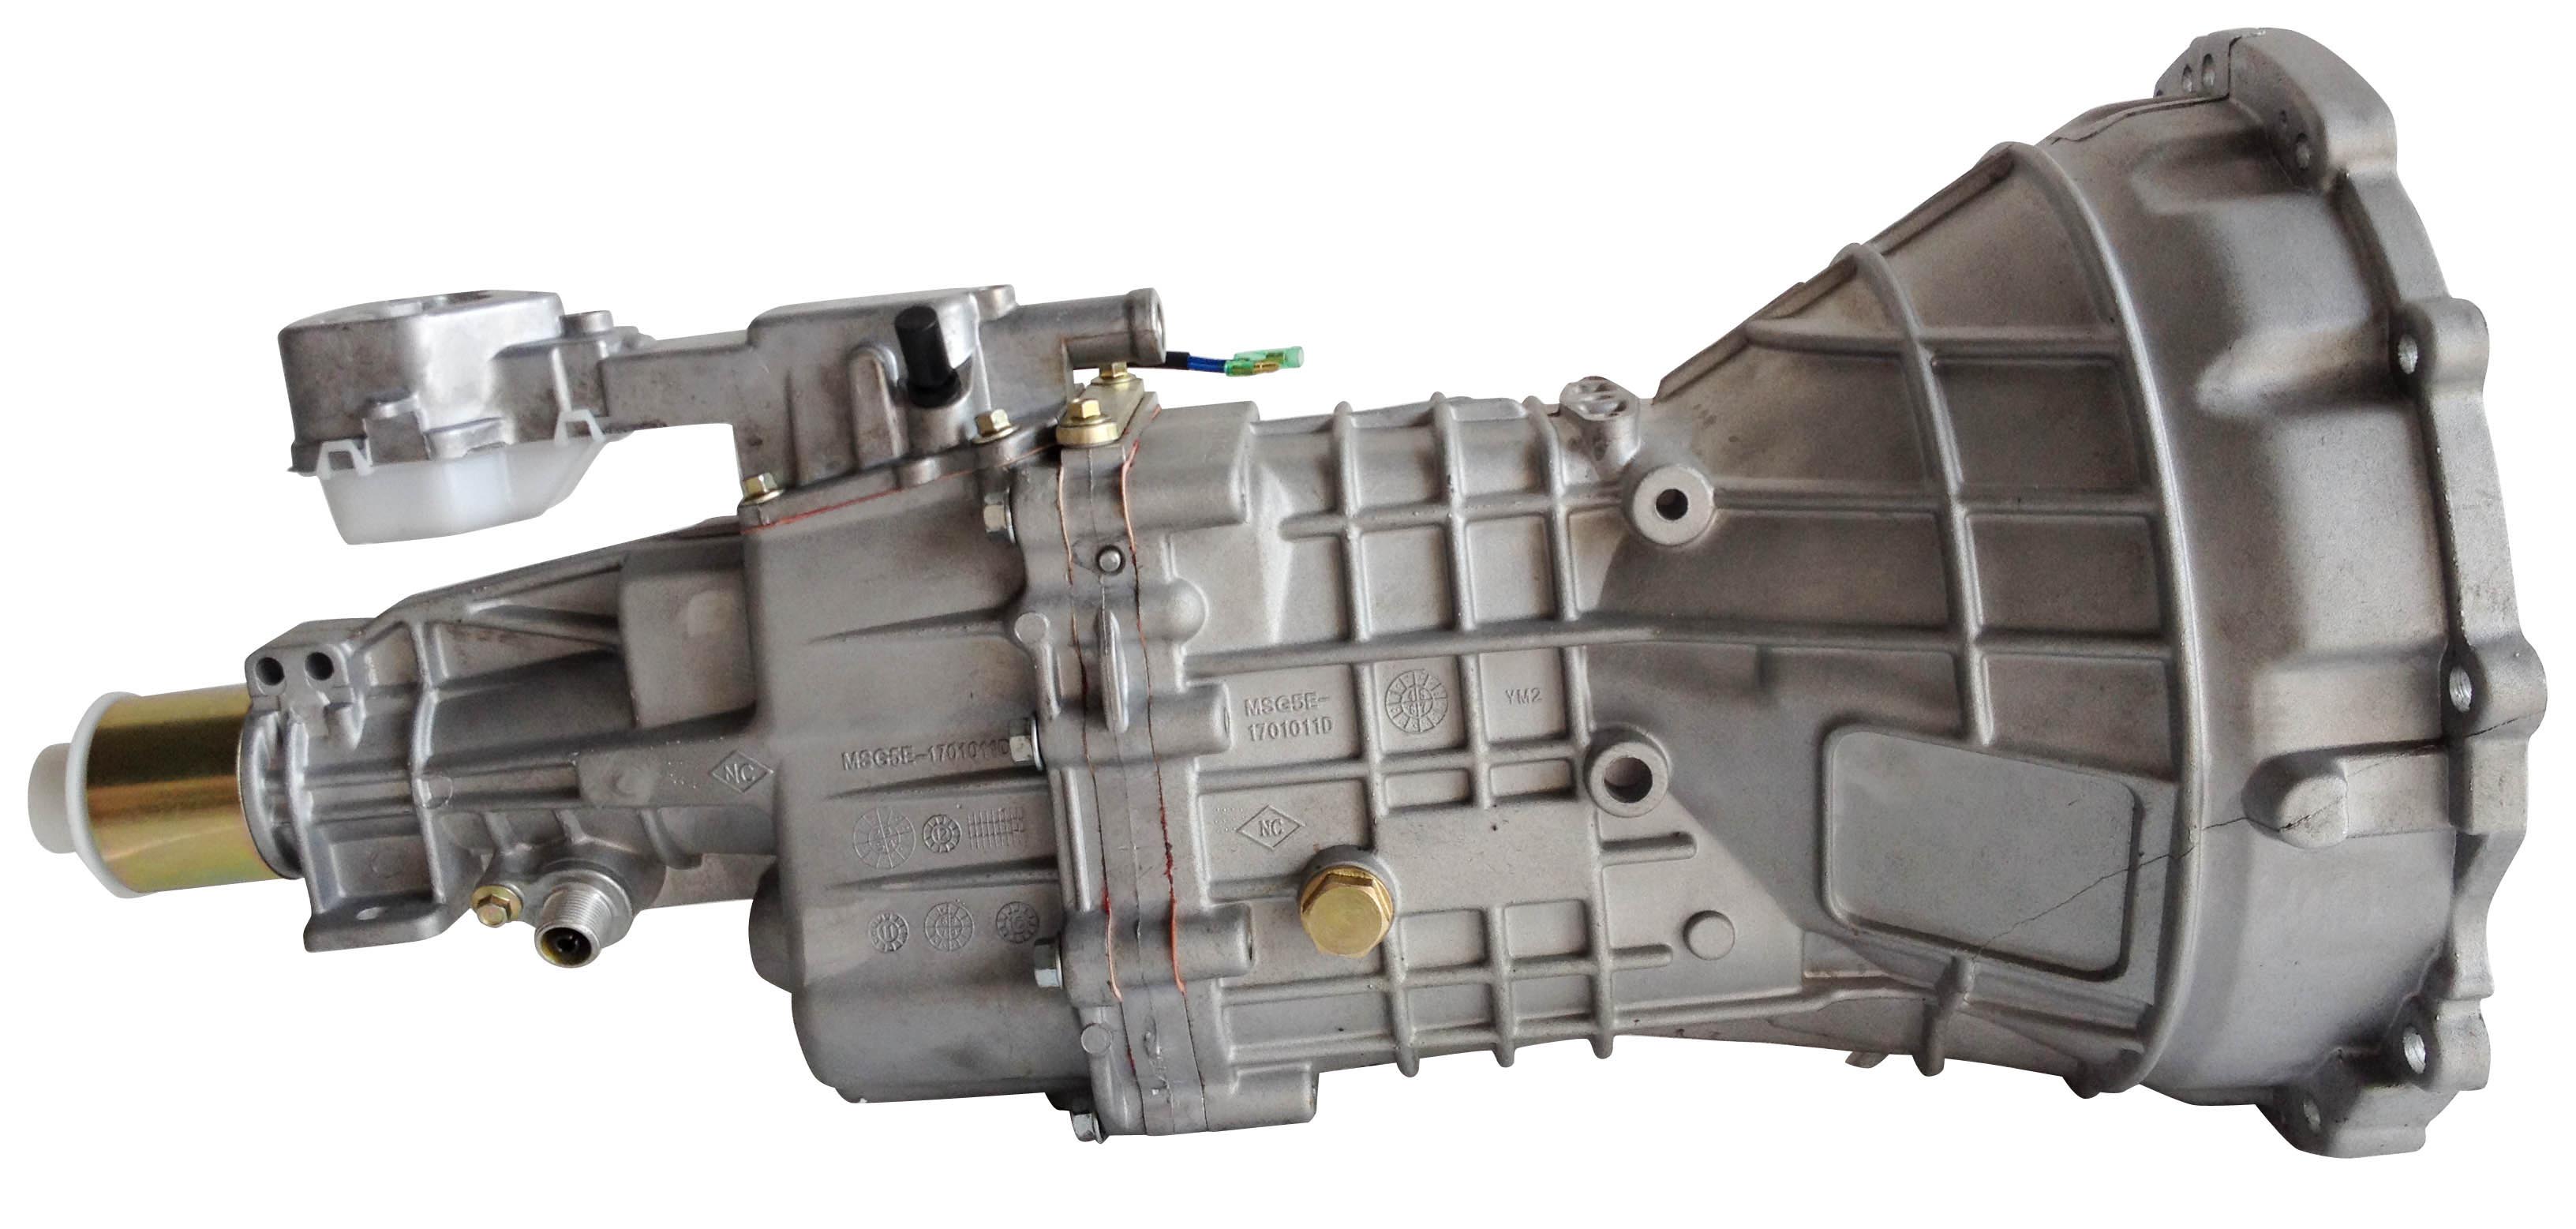 TFR54汽车变速器-- TFR54 Automotive Transmission (2).jpg